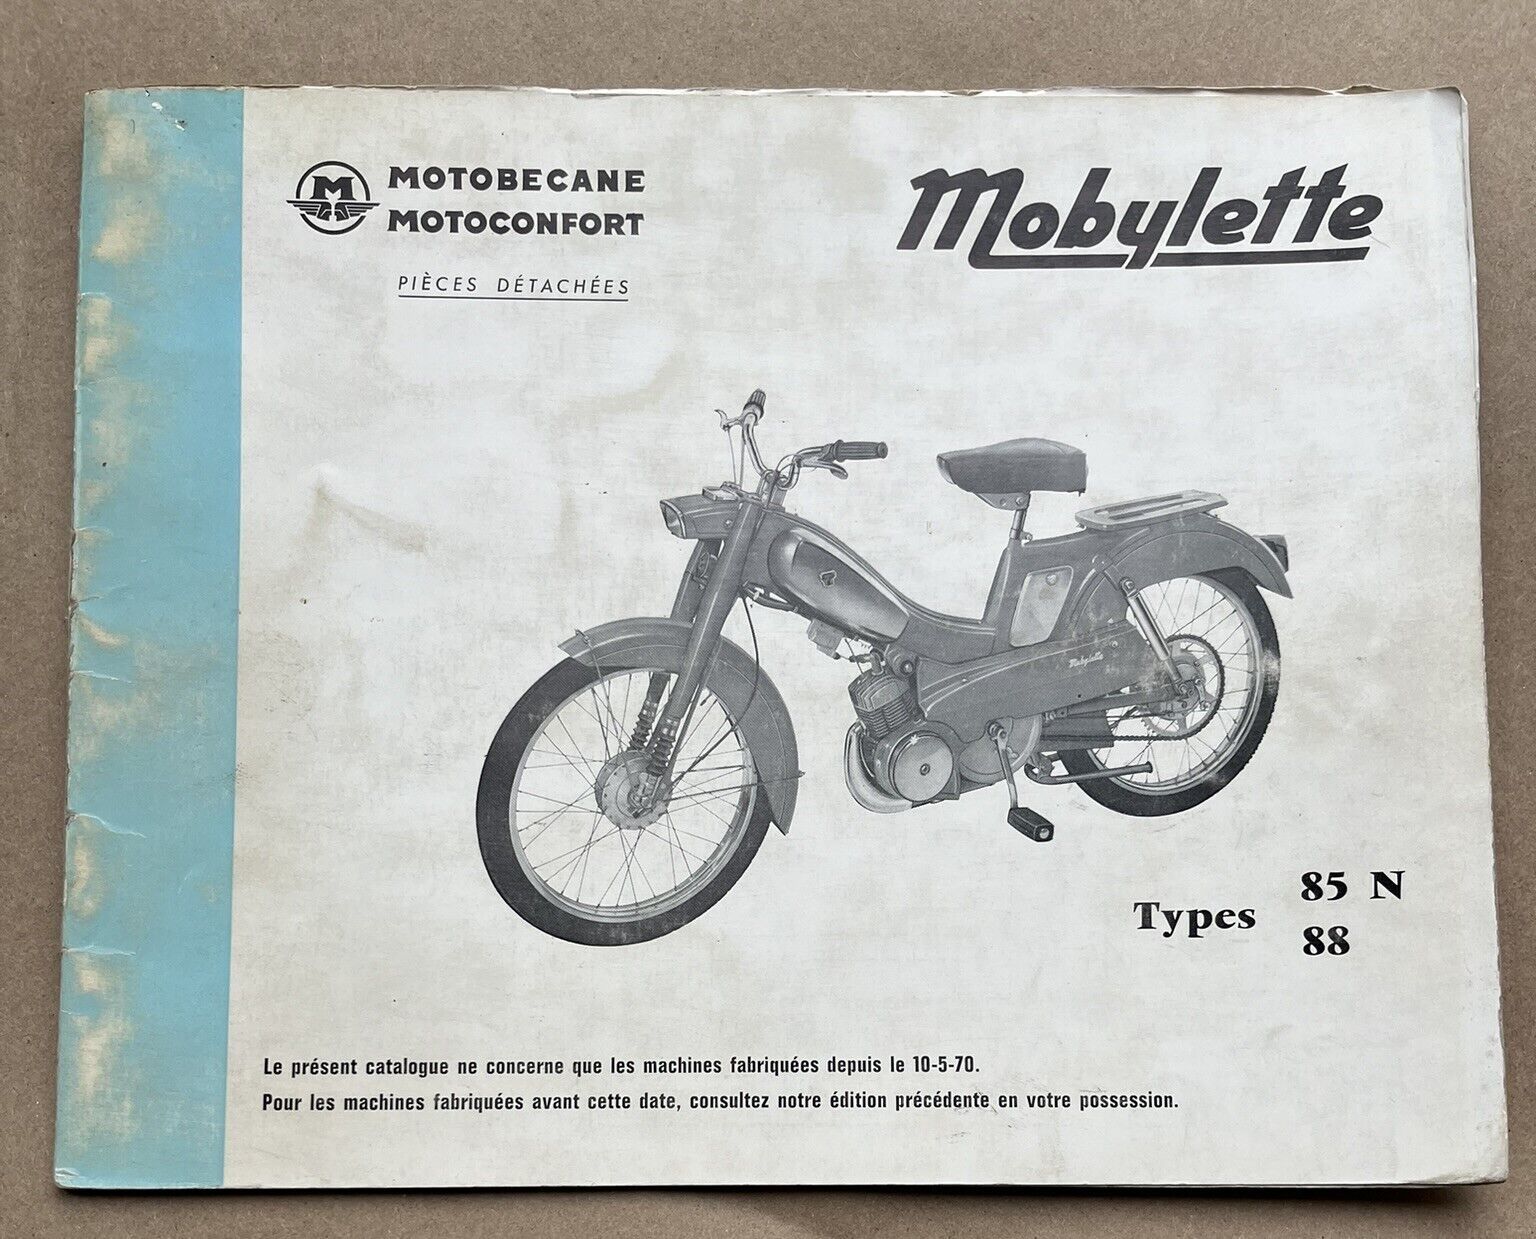 Motobecane Motoconfort Mobylette Type 85 N L 88 L LC Spare Part Catalog French